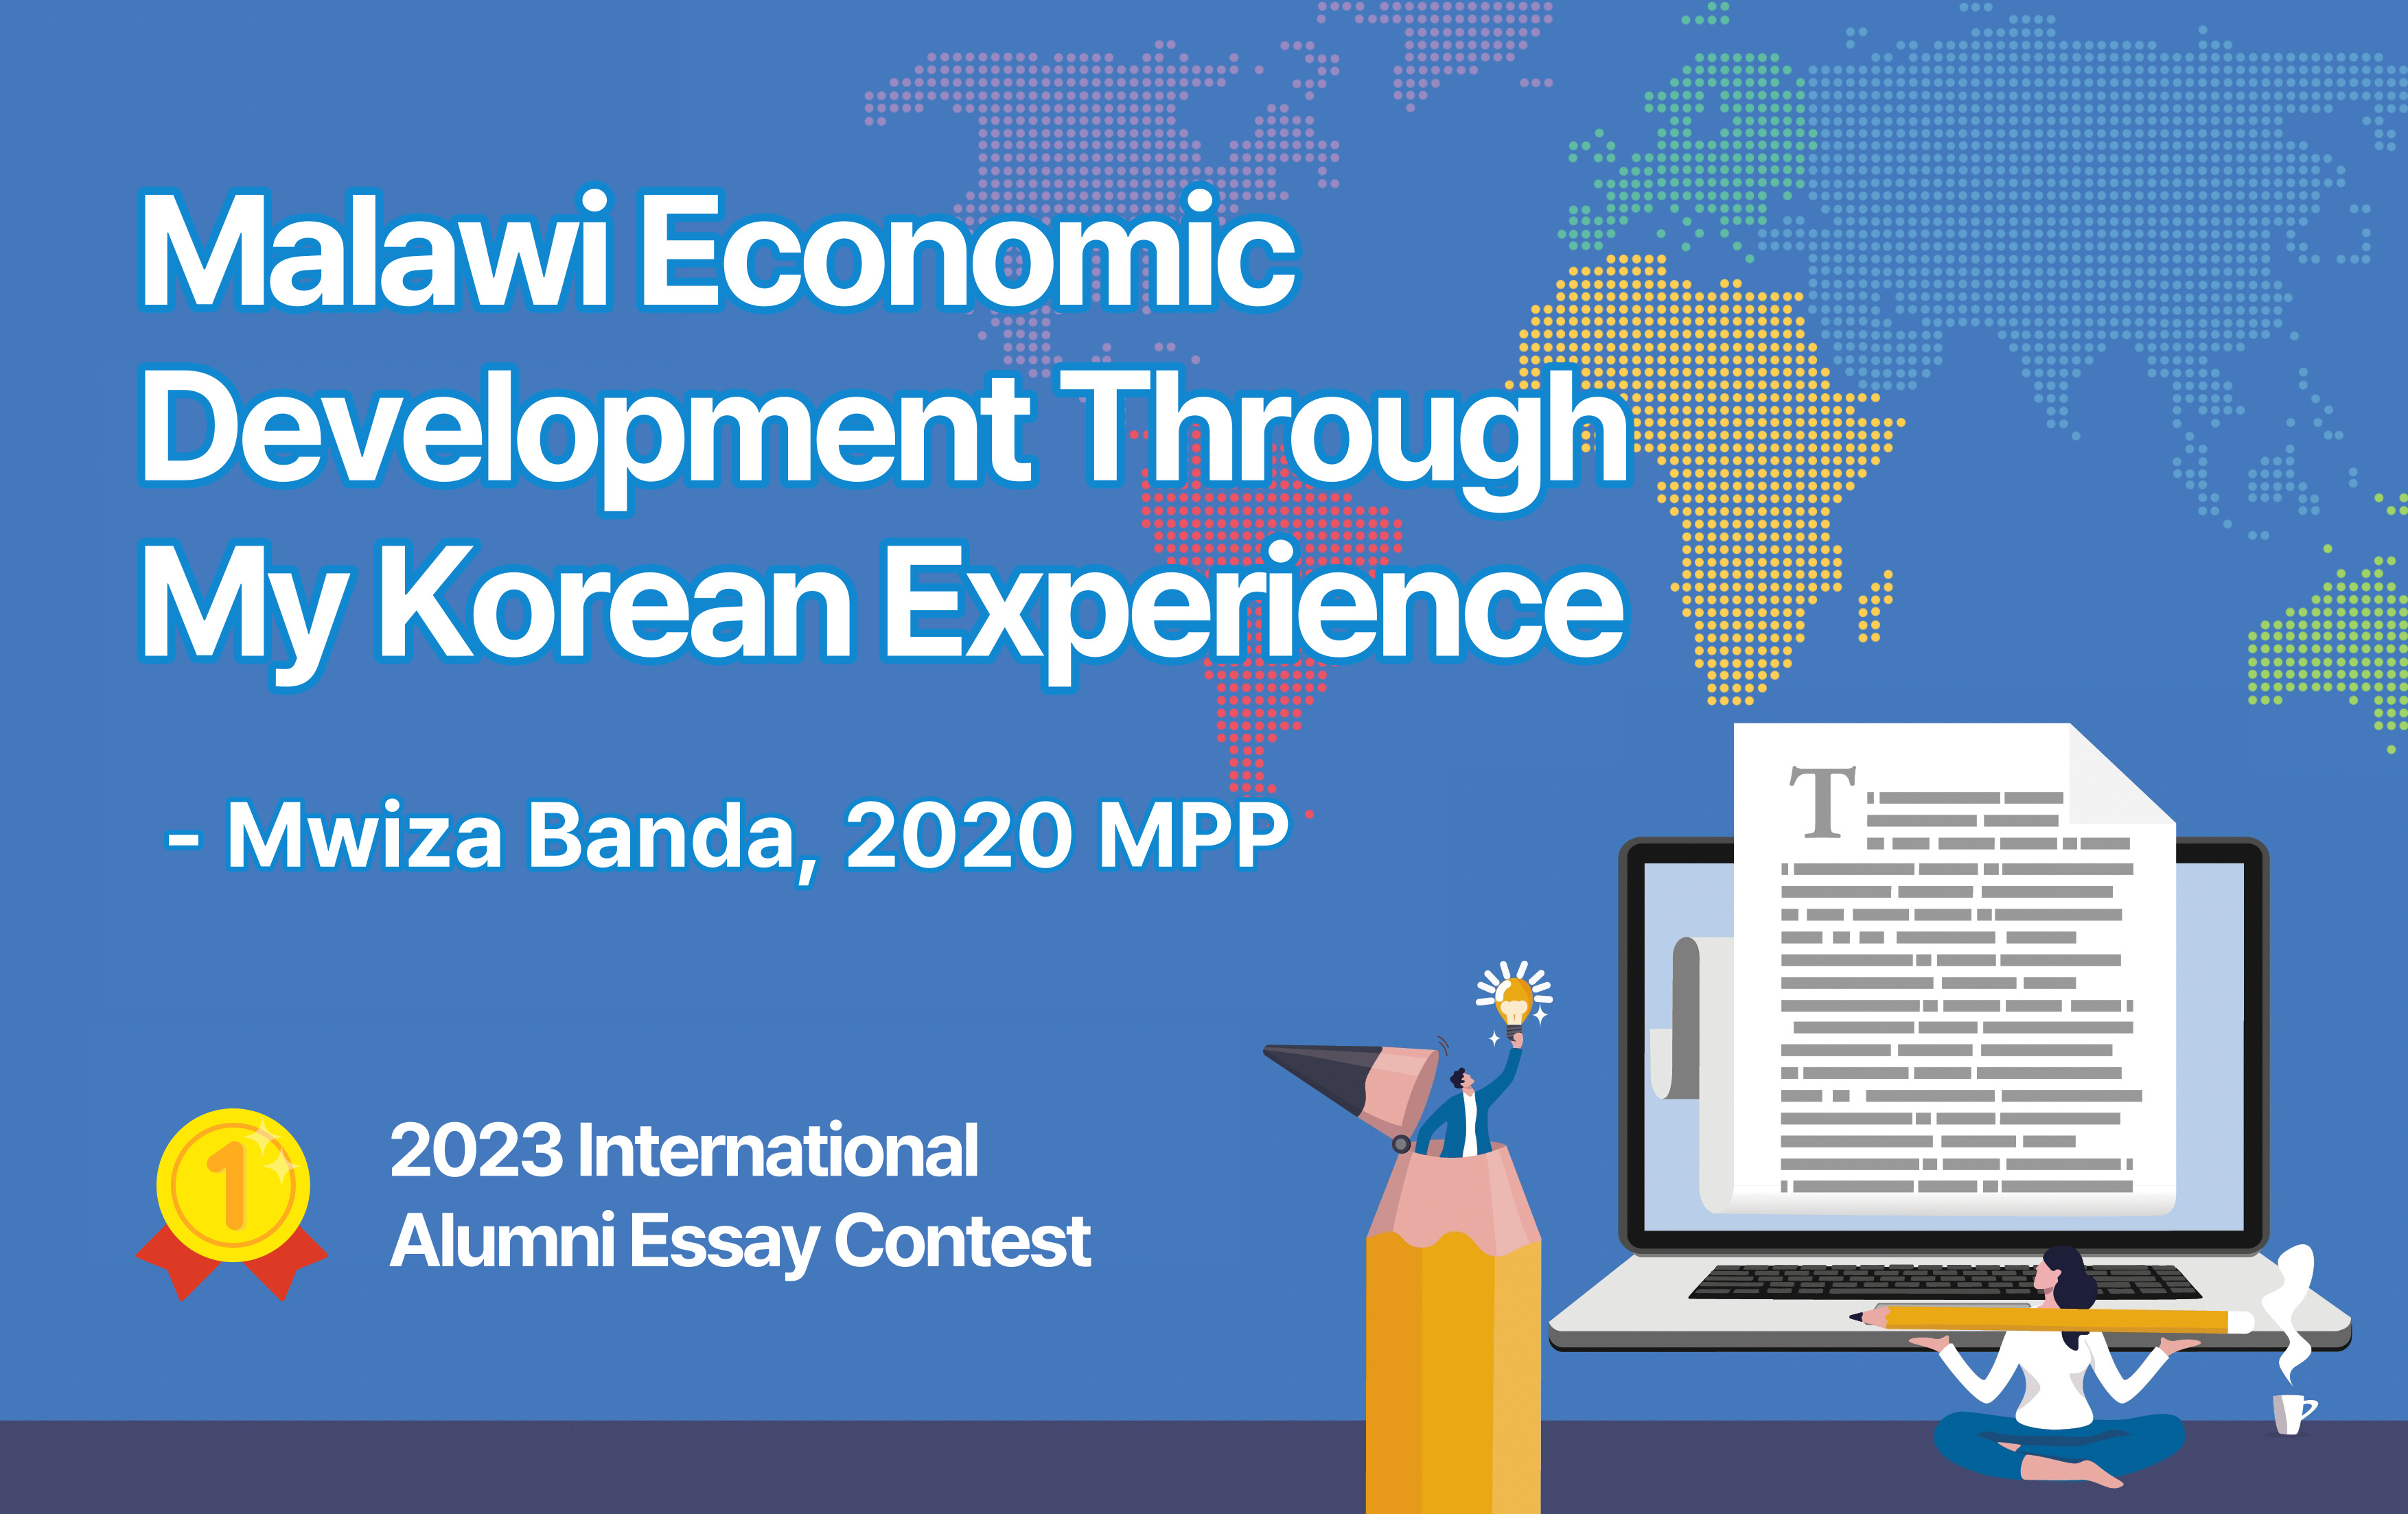 Malawi Economic Development Through My Korean Experience (Mwiza Banda, 2020 MPP)